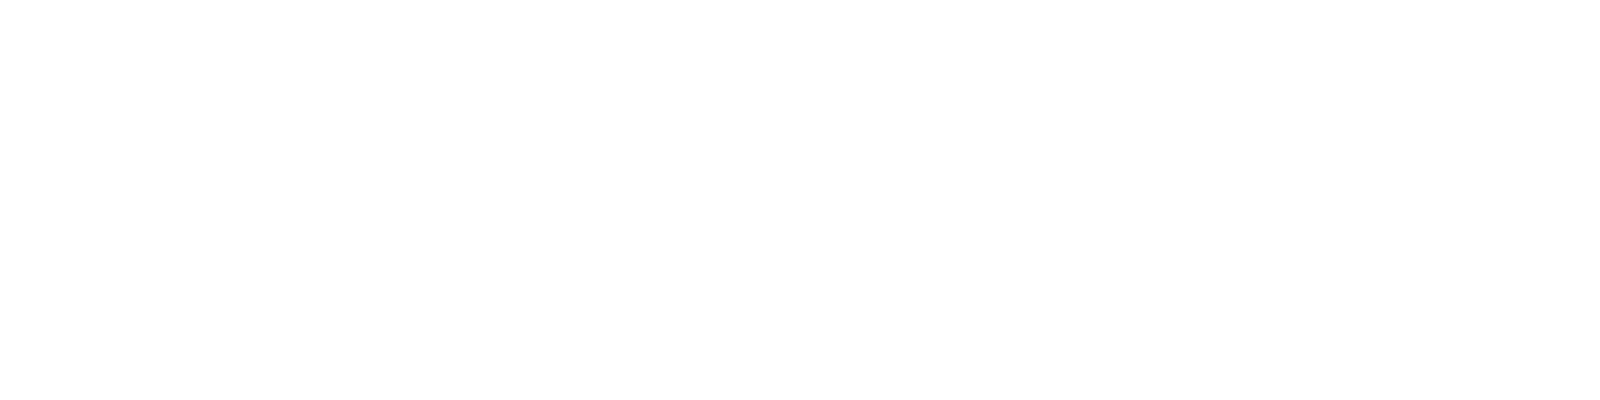 Insider video series logo